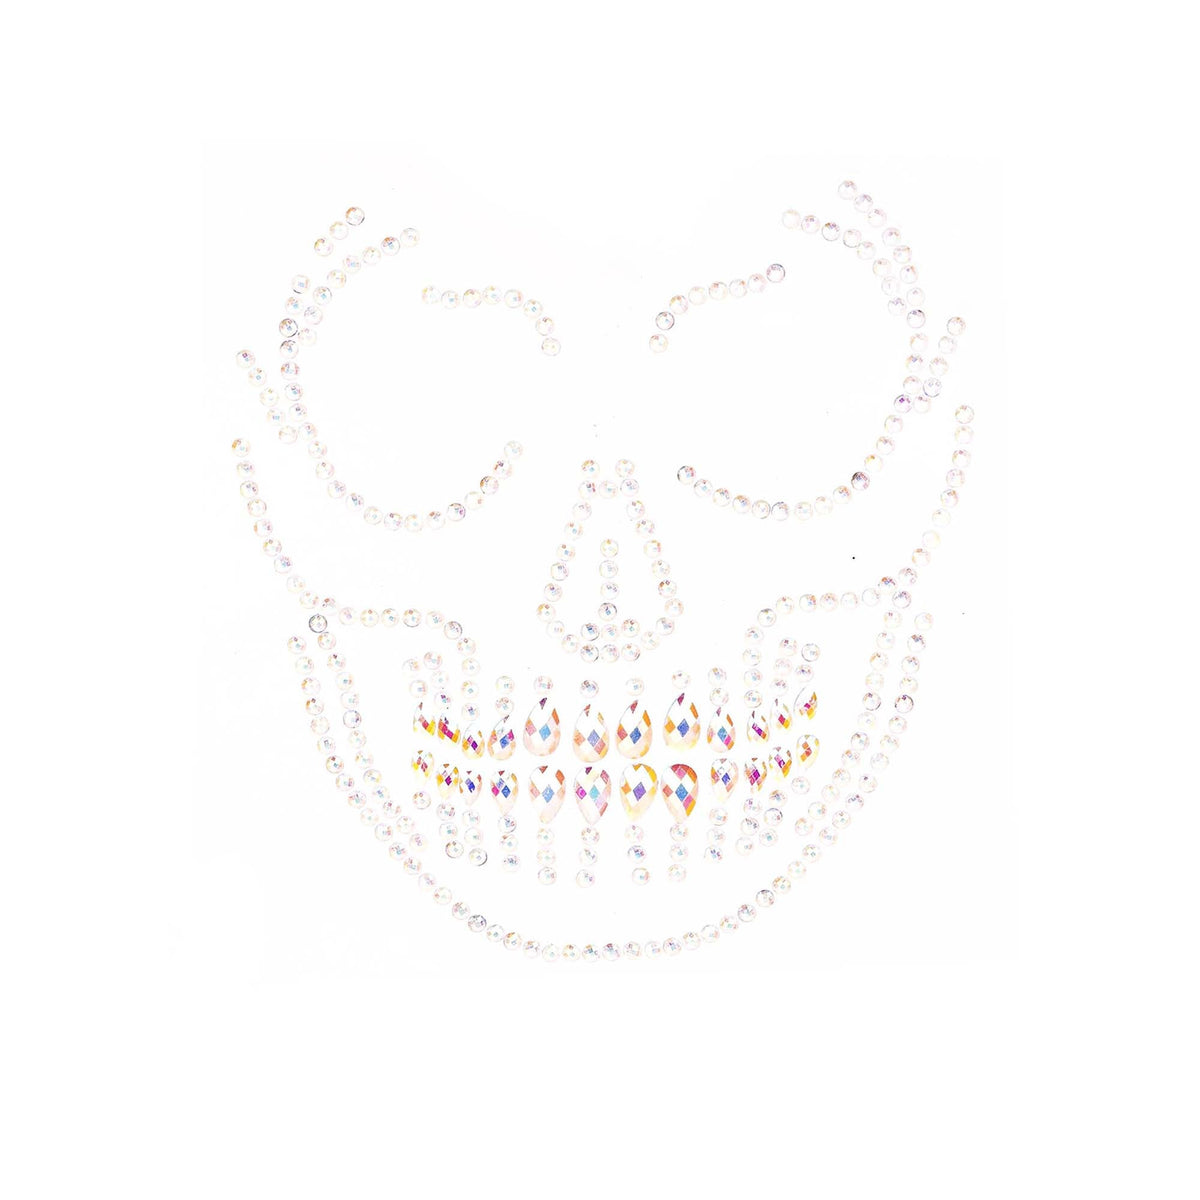 LEG AVENUE/SKU DISTRIBUTORS INC Costume Accessories Glow-in-the-Dark Skull Adhesive Face Jewels